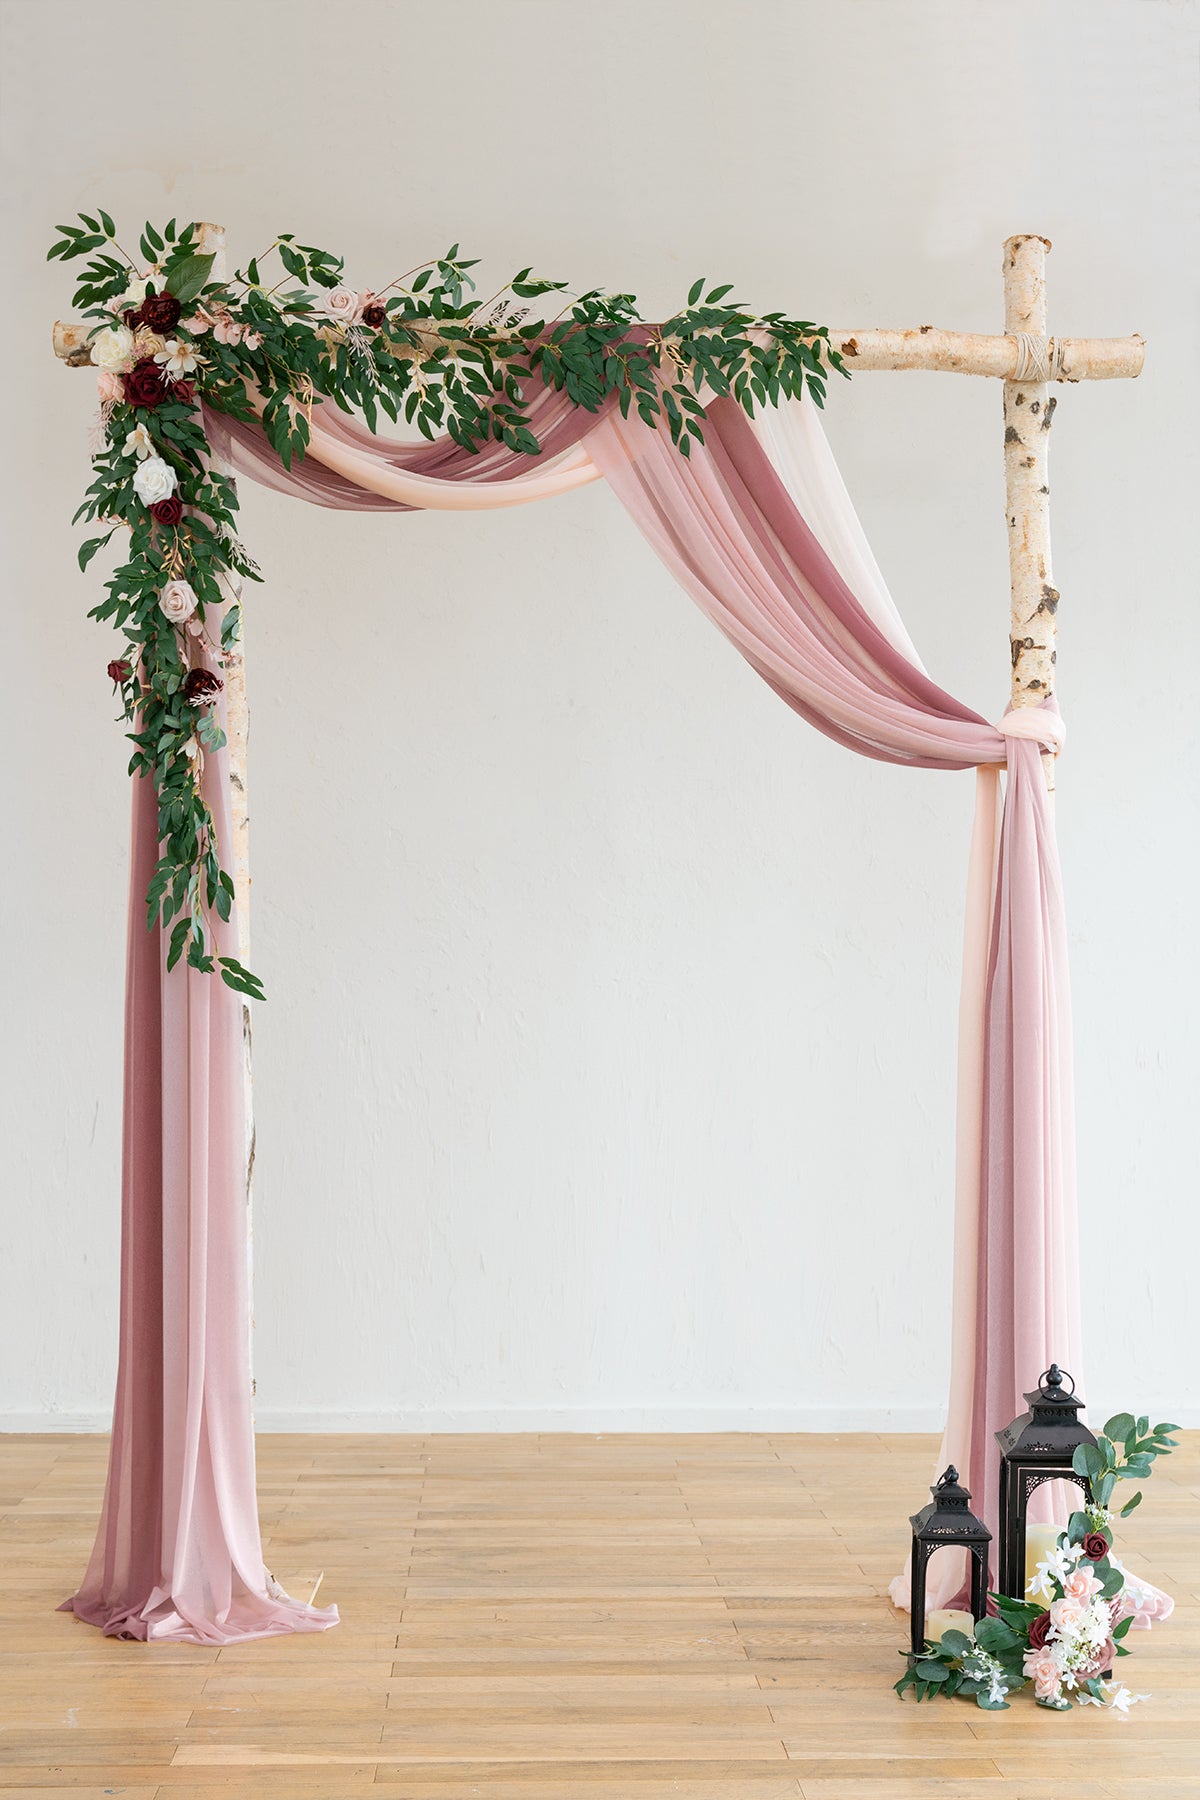 Wedding Arch Draping Fabric Teal Wedding Arch Drapes 6 Yards 2